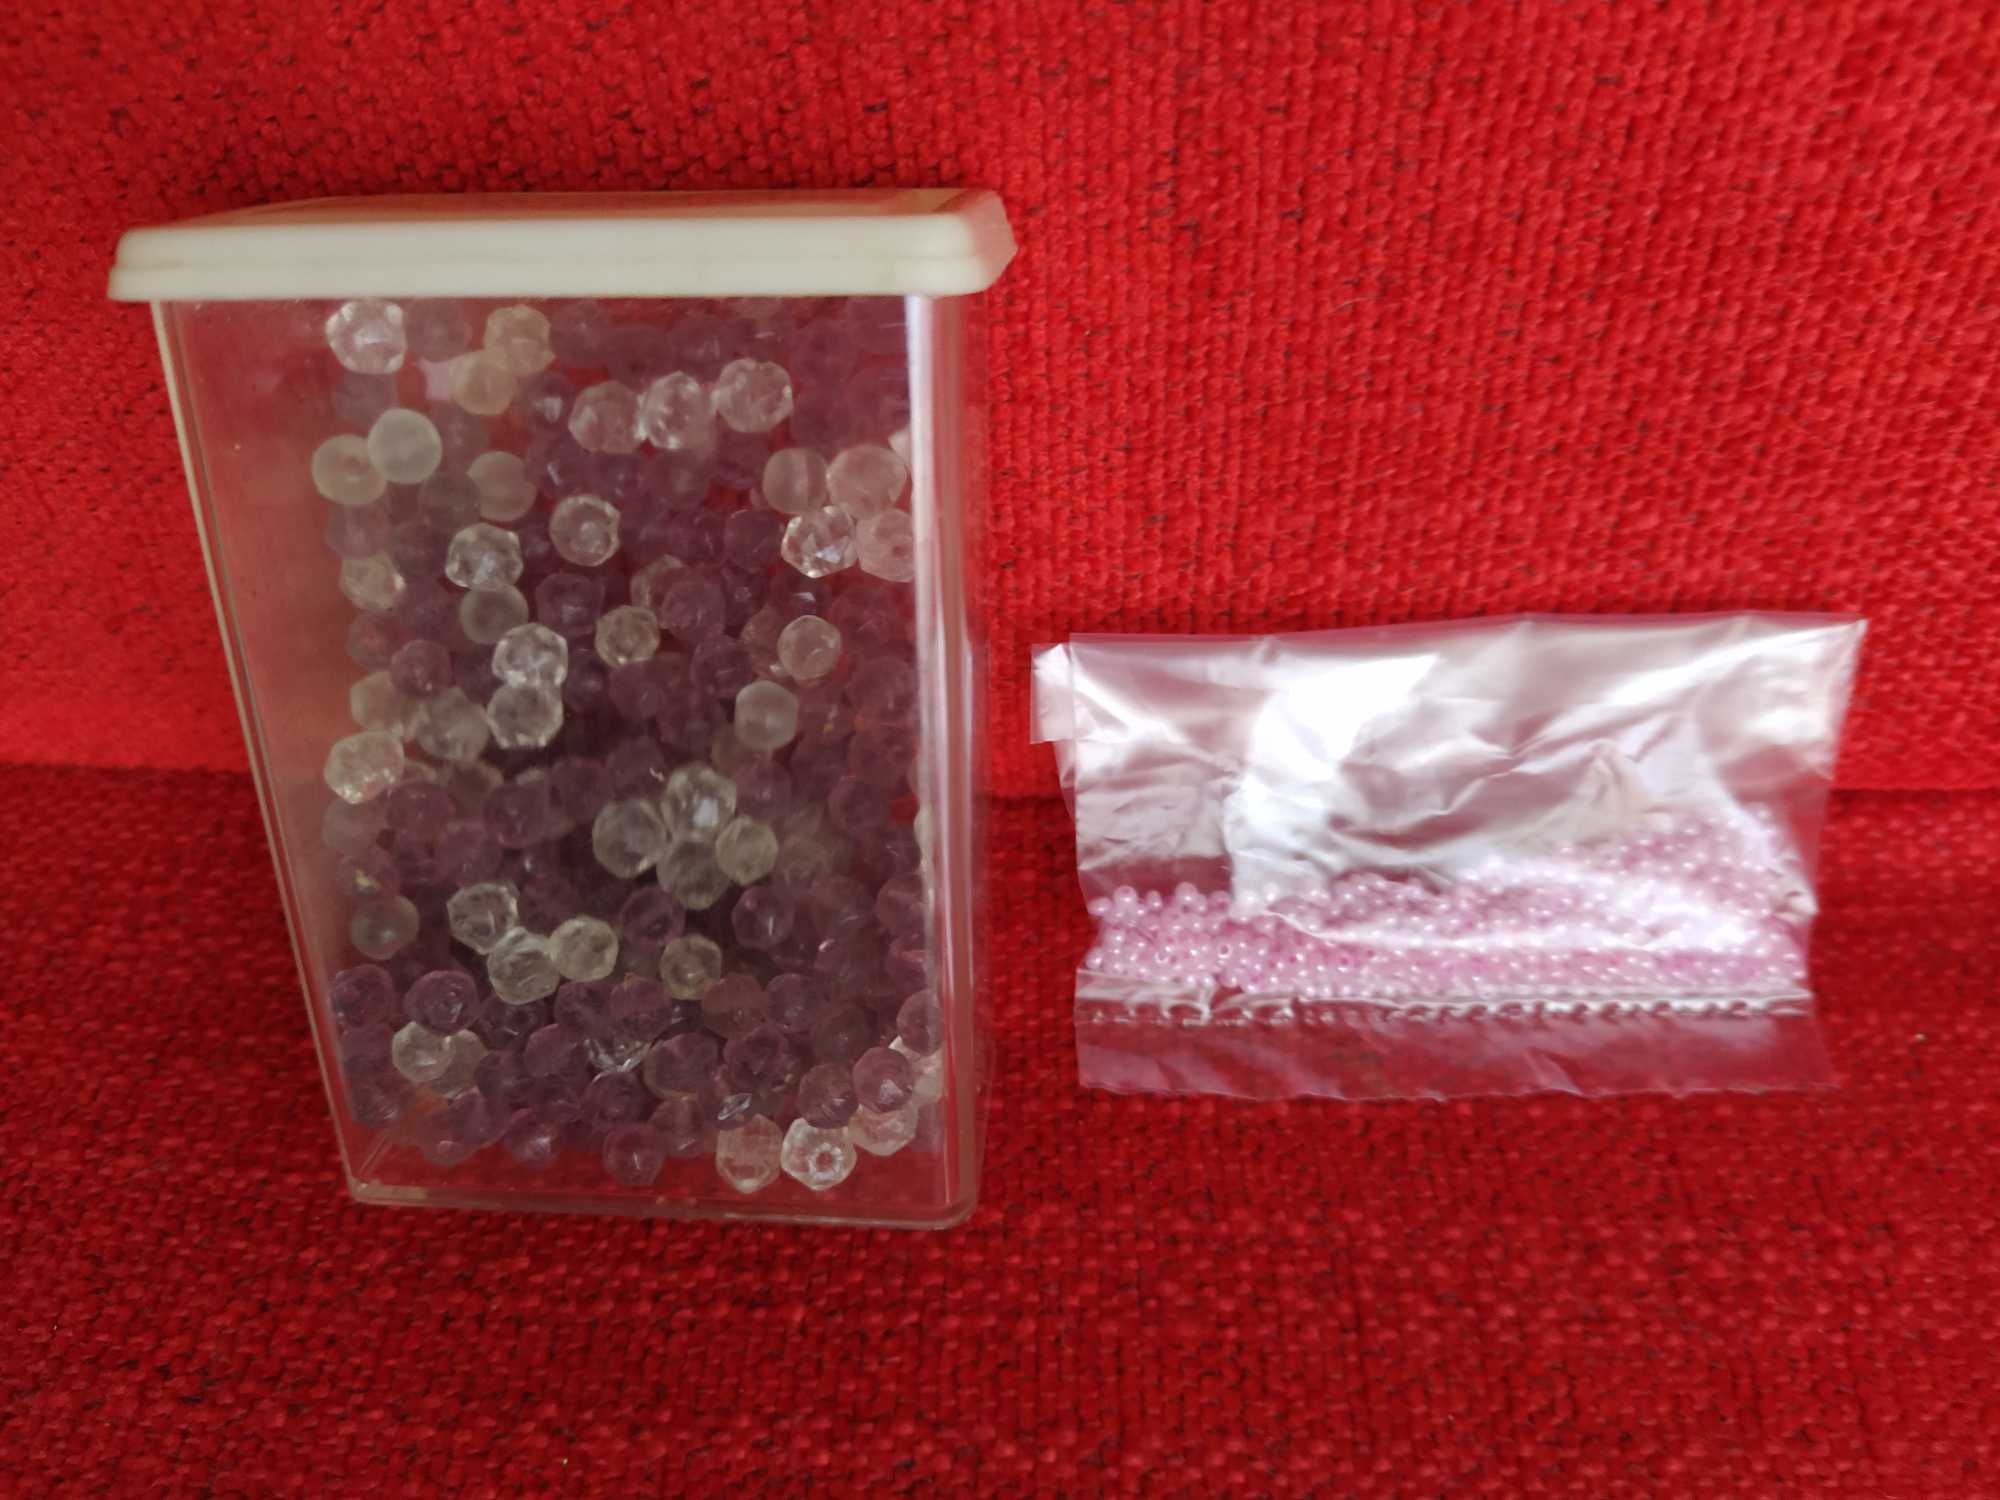 Caixa c/missangas tamanho médio 2 cores + missangas rosa